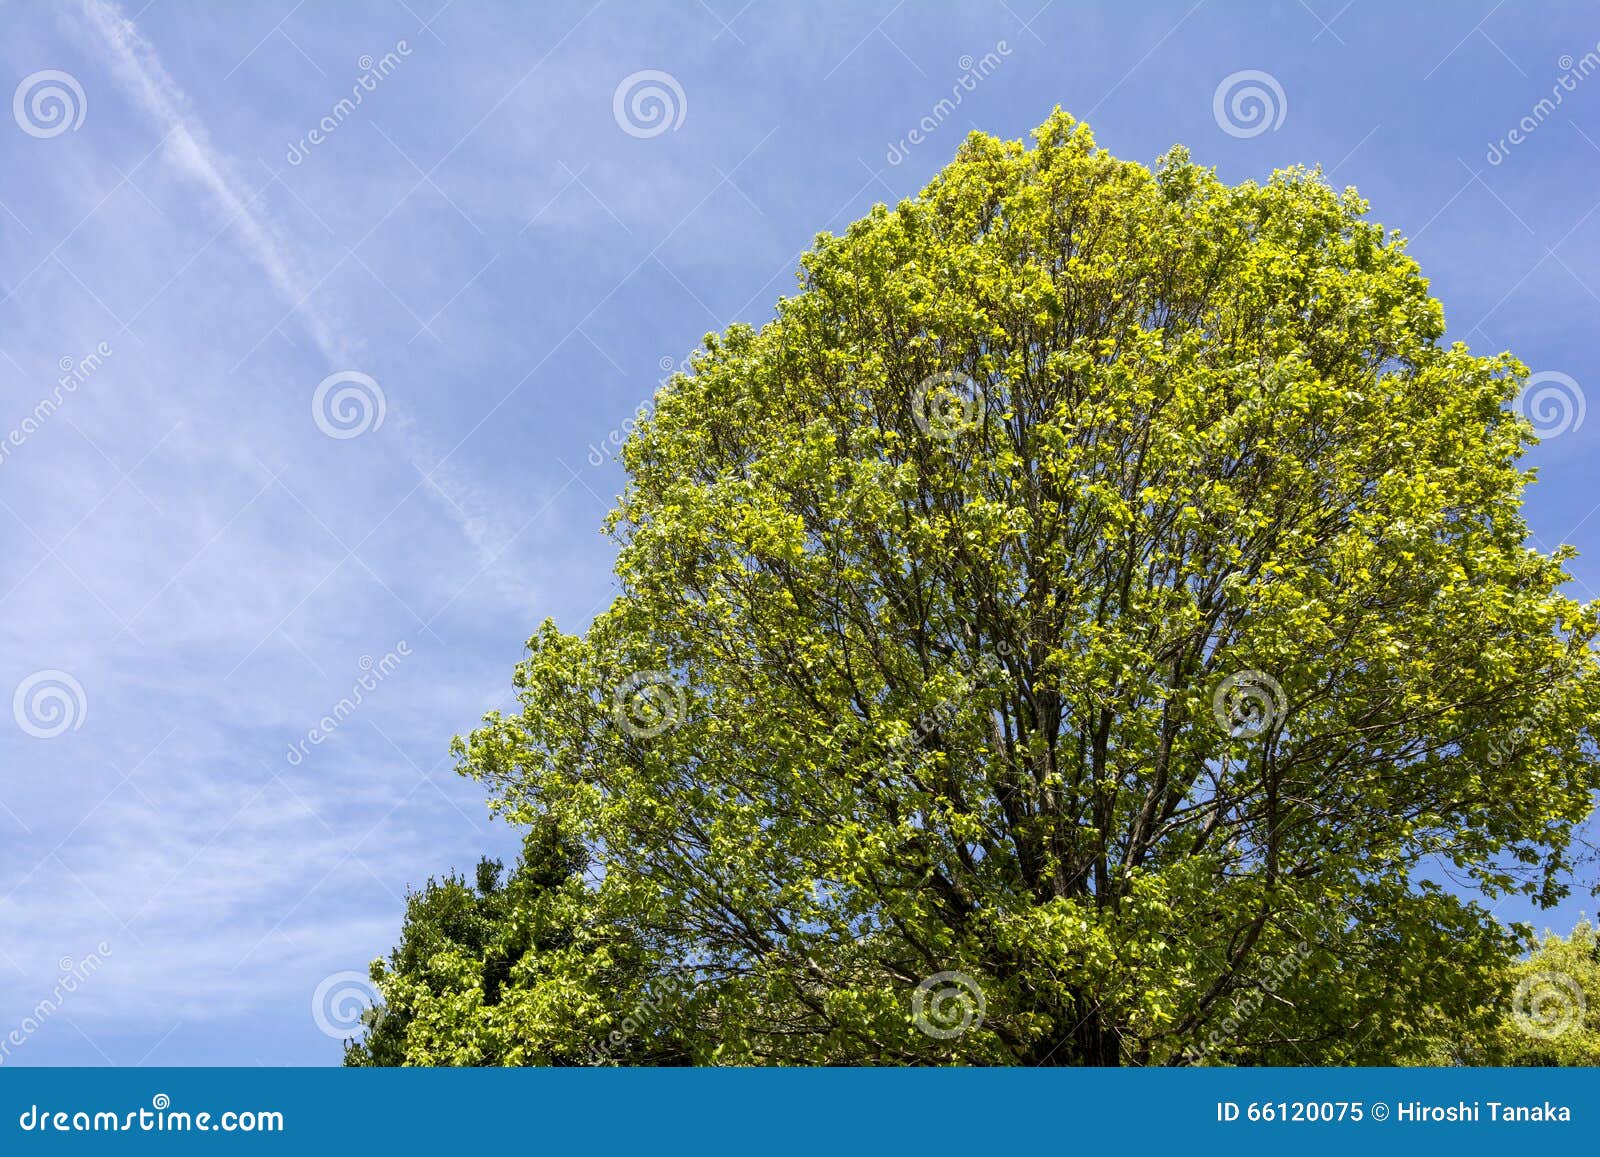 quercus serrata tree